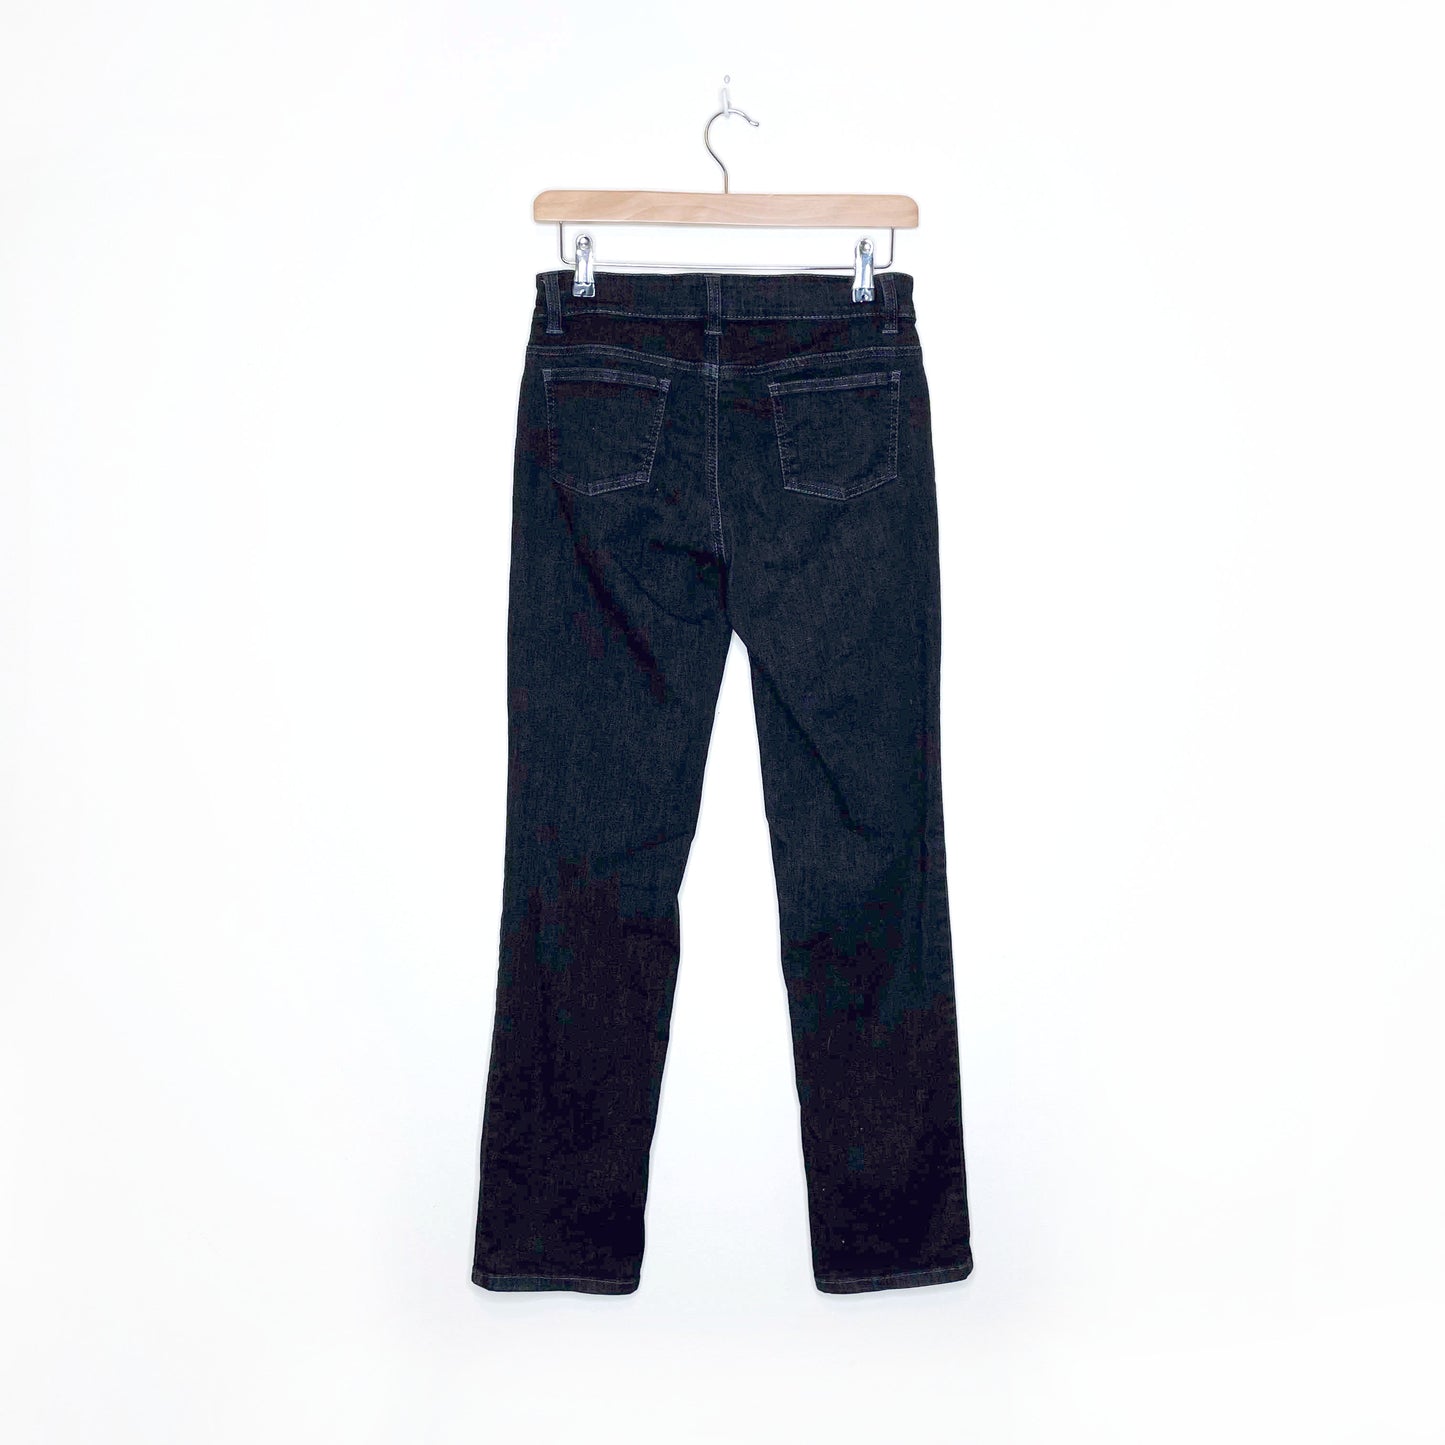 eileen fisher organic cotton straight leg jeans - size 2P